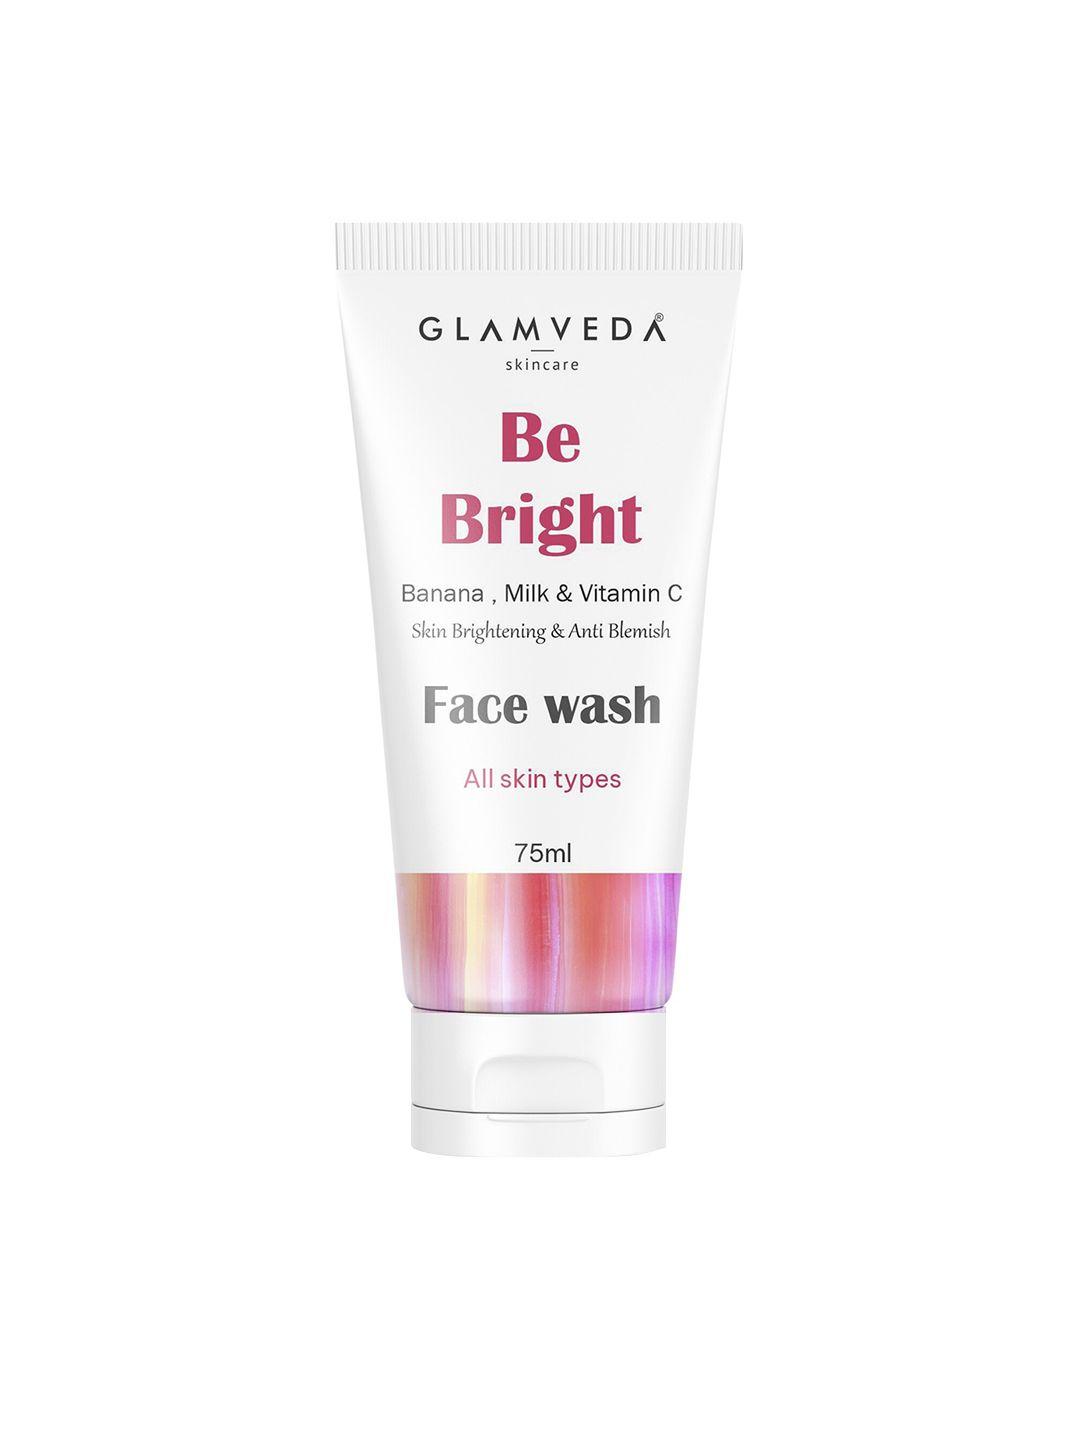 glamveda be bright skin brightening & anti blemish face wash with vitamin c - 75 ml